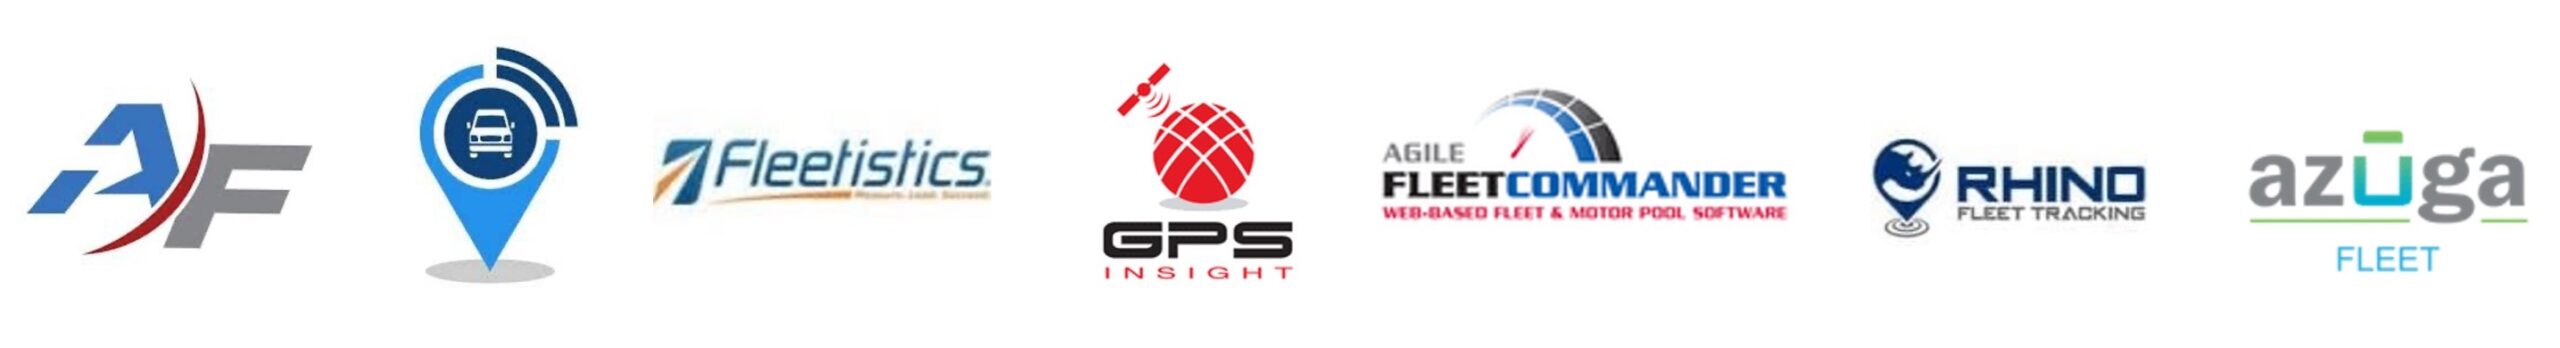 Best GPS Fleet Tracking - Logos